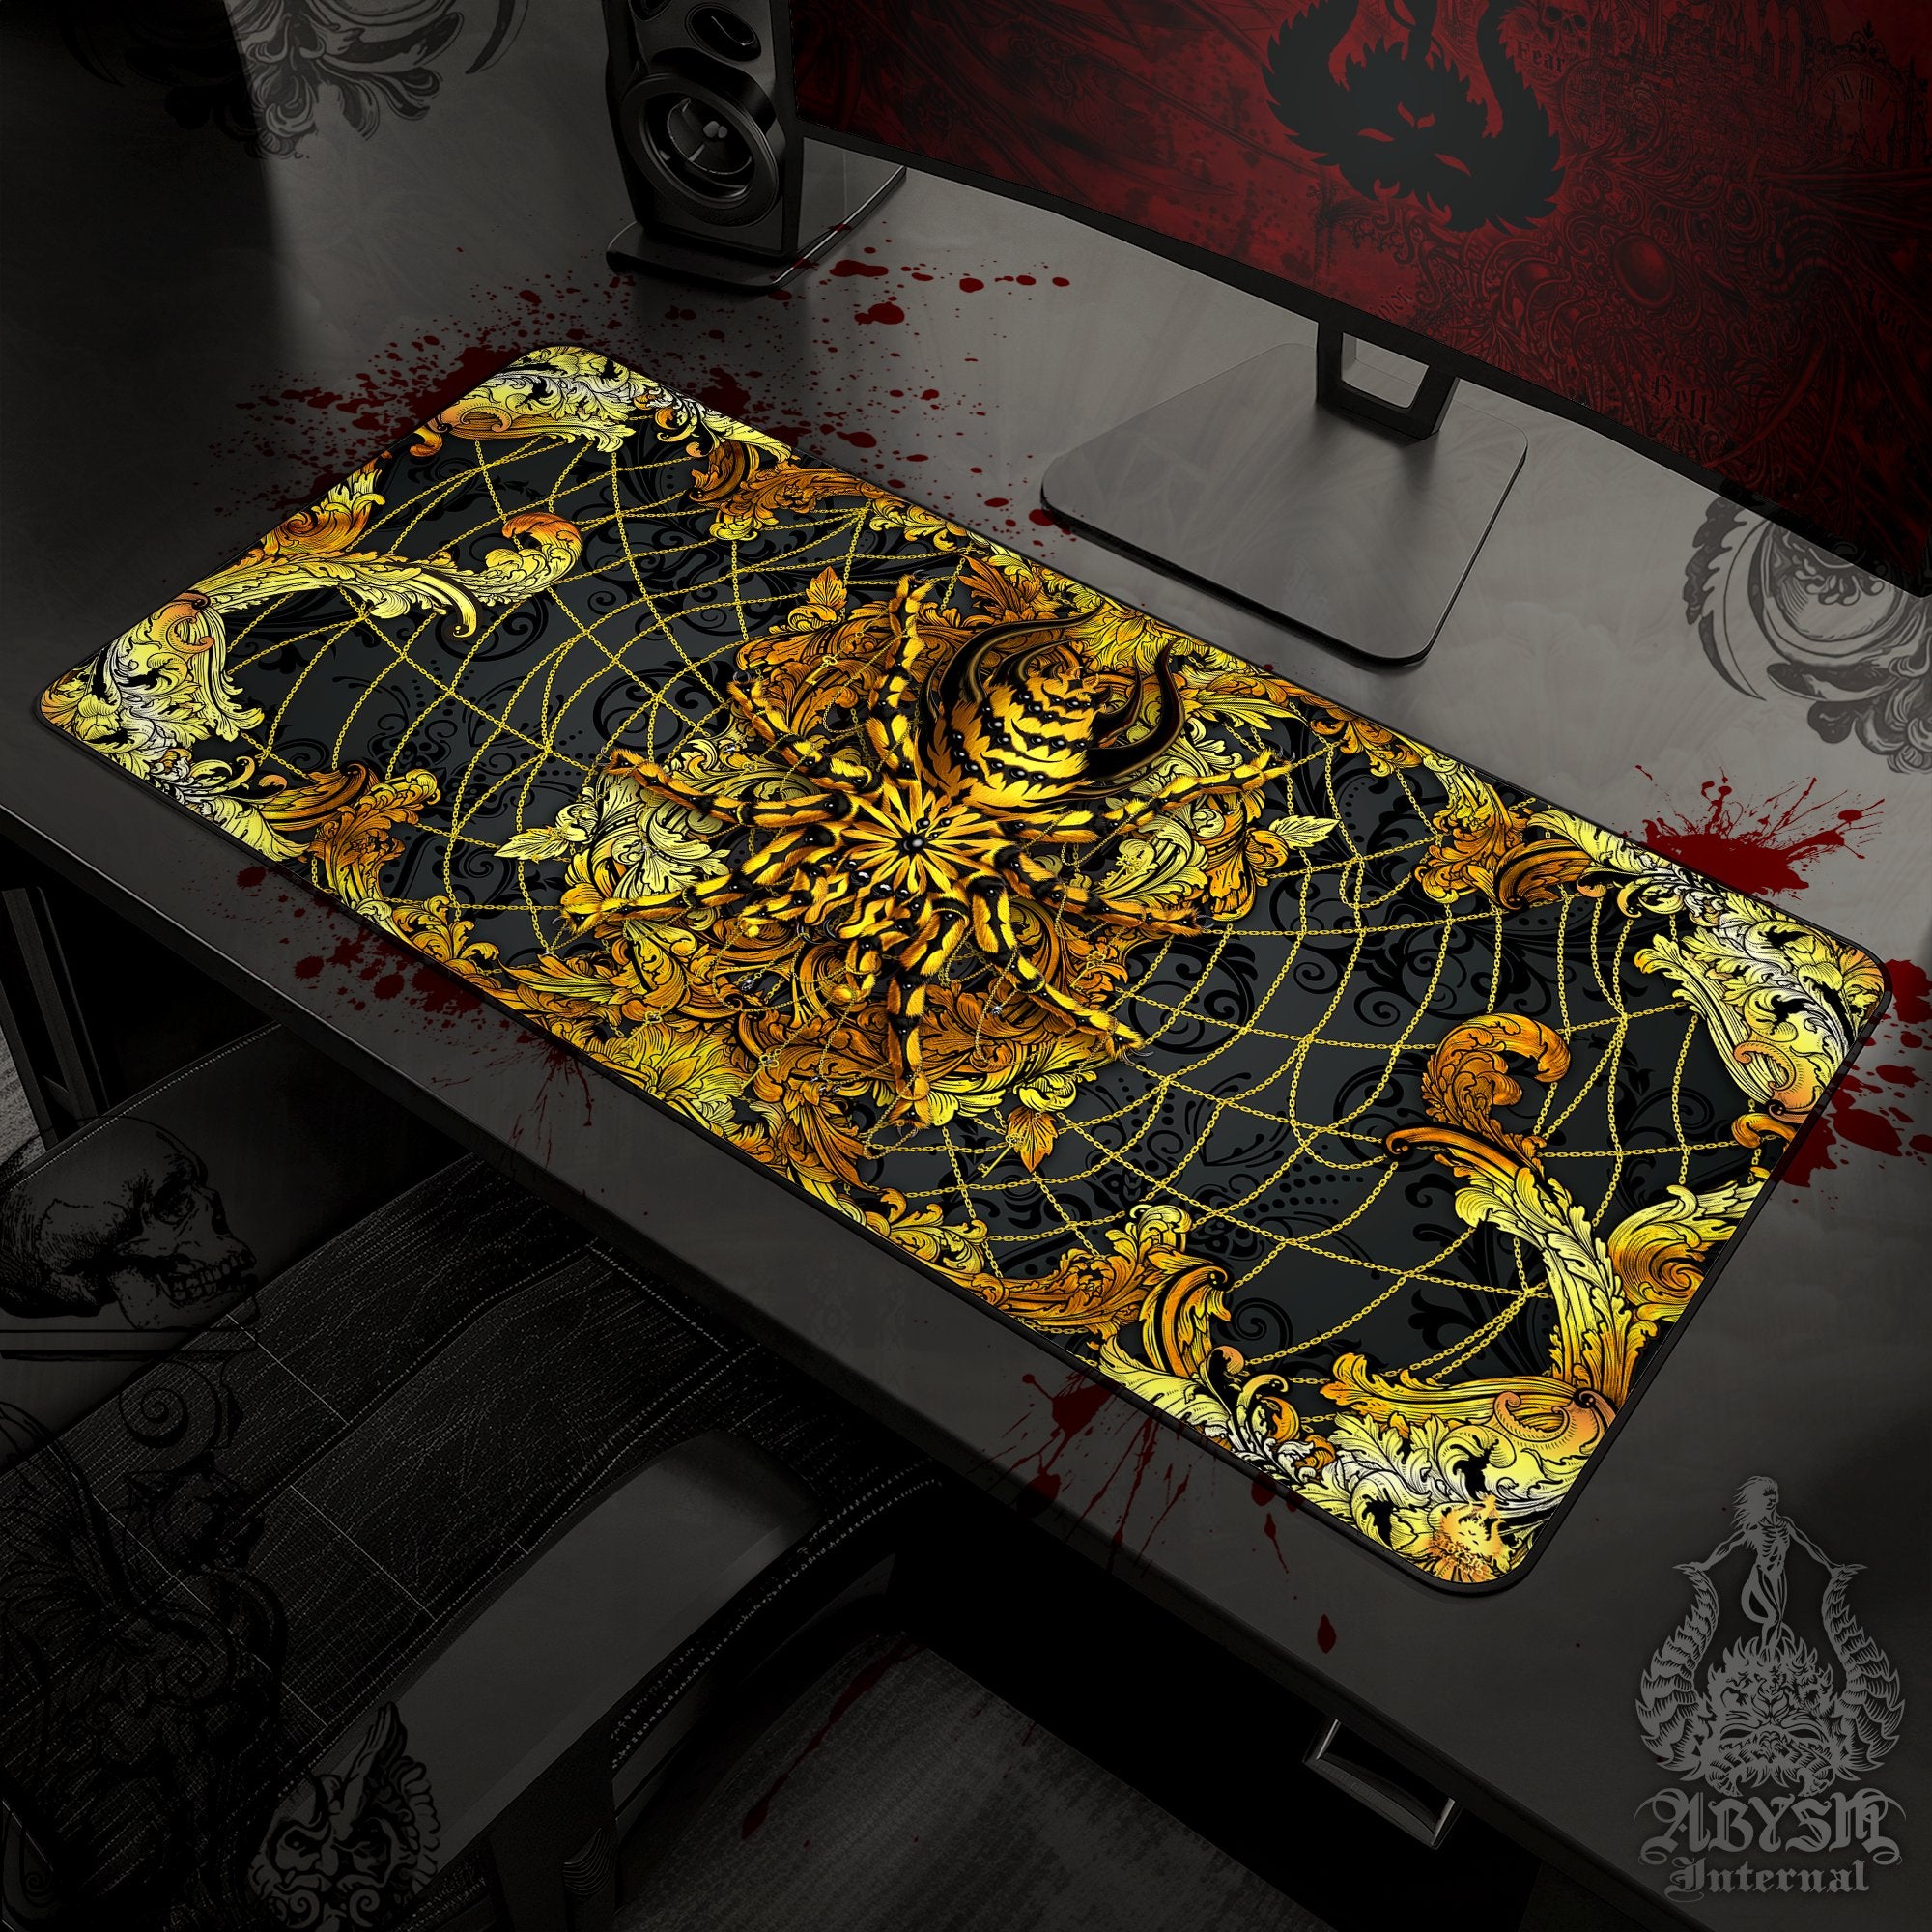 Spider Gaming Desk Mat, Tarantula Mouse Pad, Gamer Table Protector Cover, Gold Ornaments Workpad, Fantasy Art Print - 2 Colors - Abysm Internal